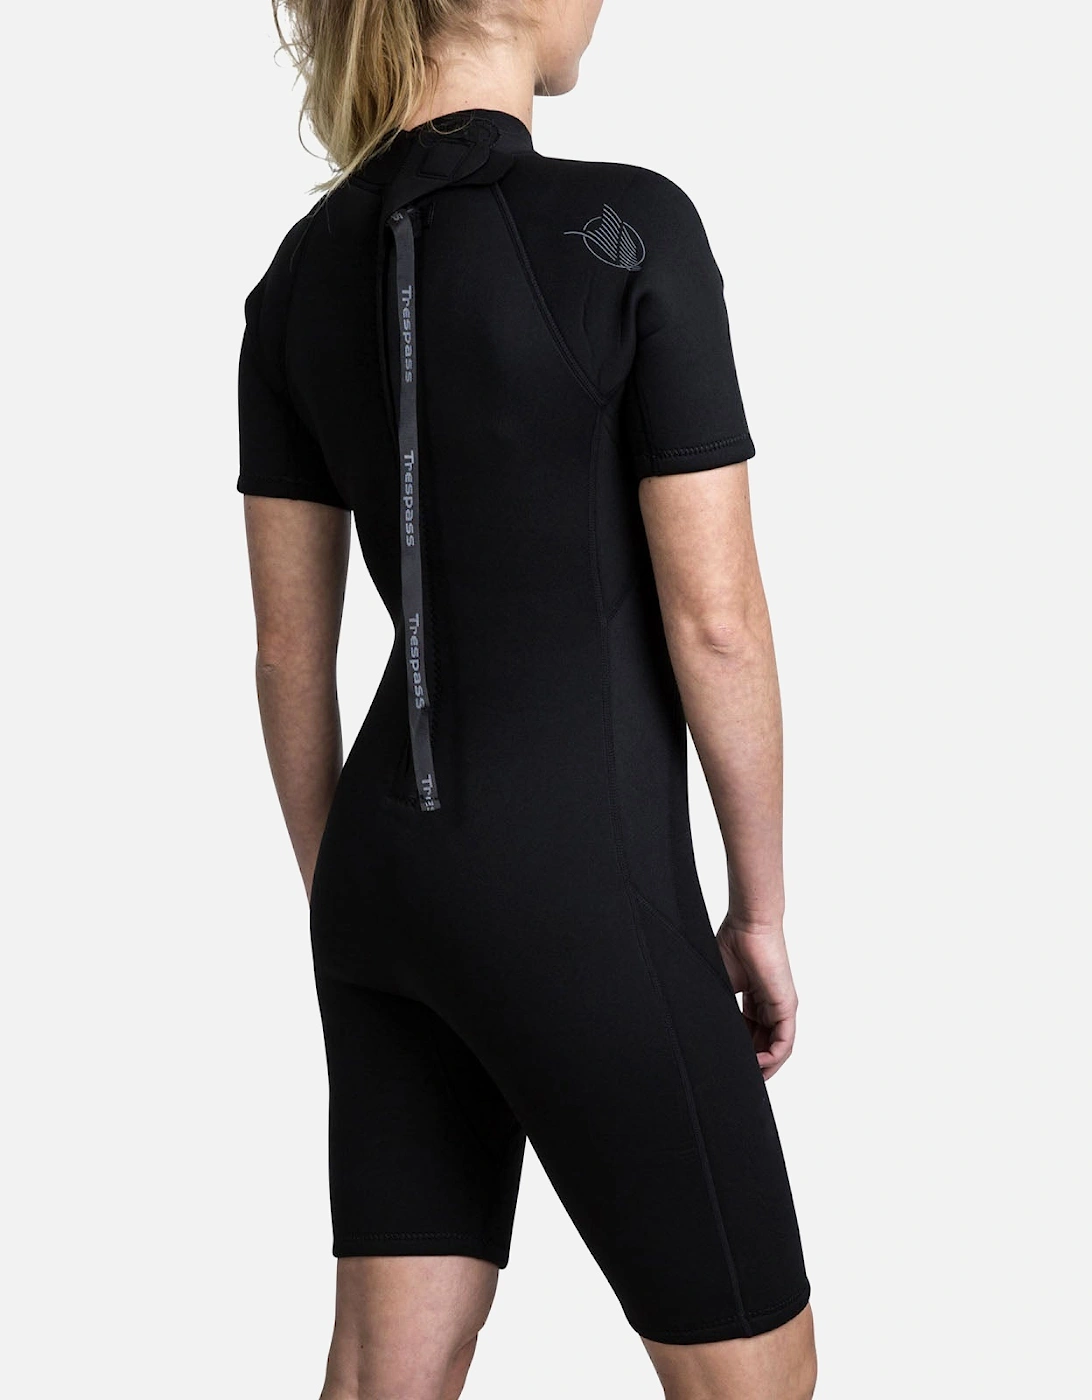 Womens Astor 3MM Short Sleeve Zip Back Surfing Wetsuit - Black